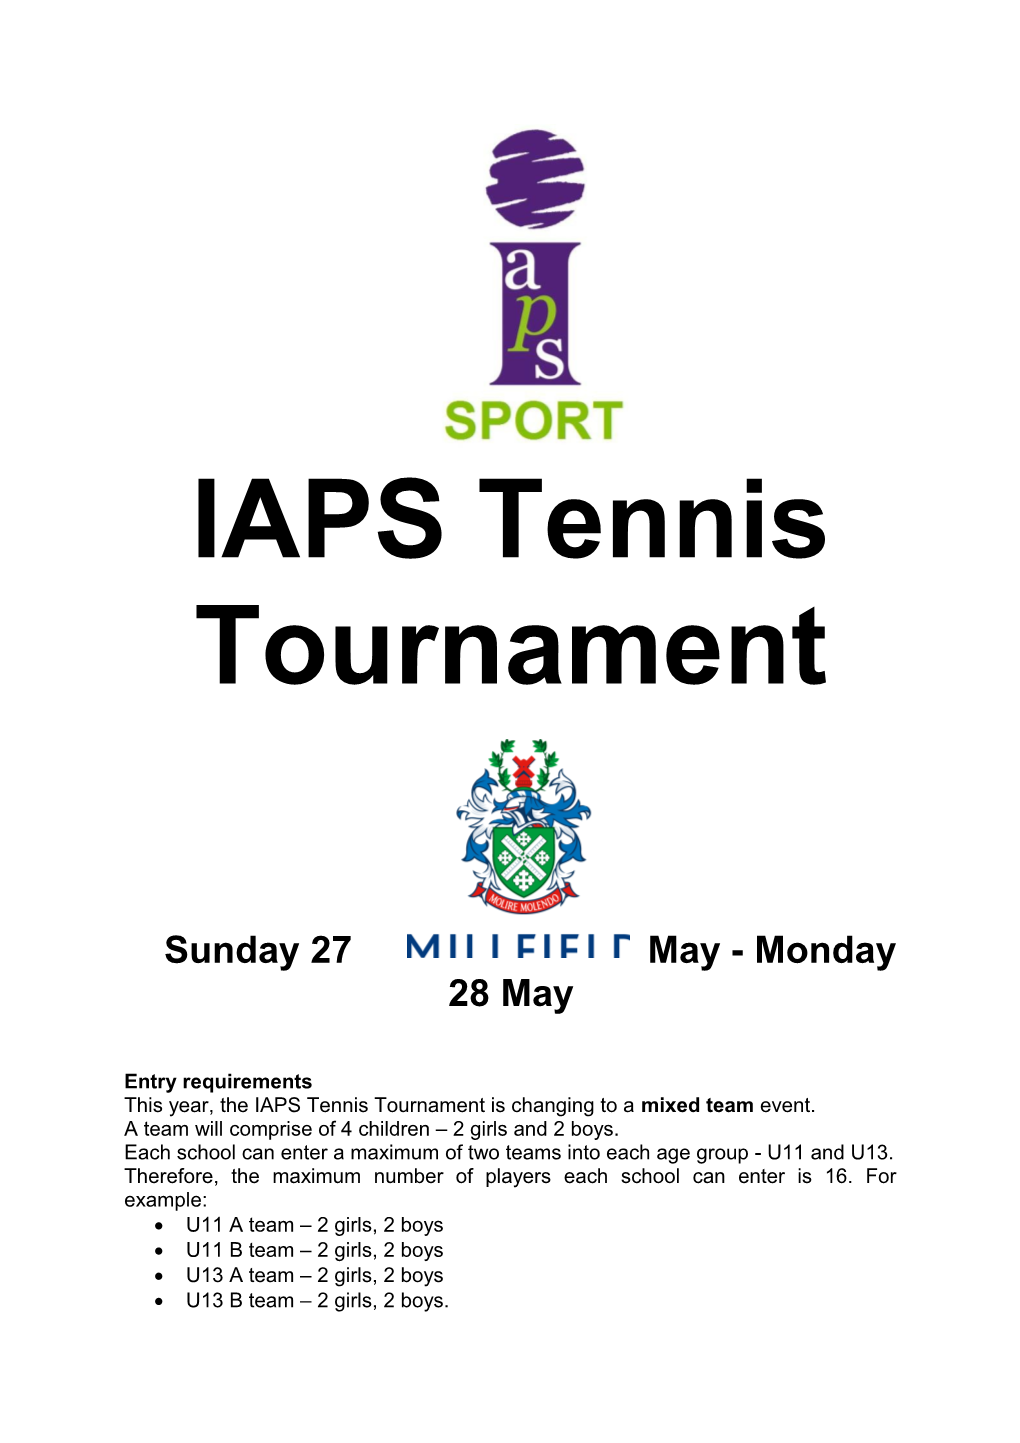 IAPS Tennis Tournament